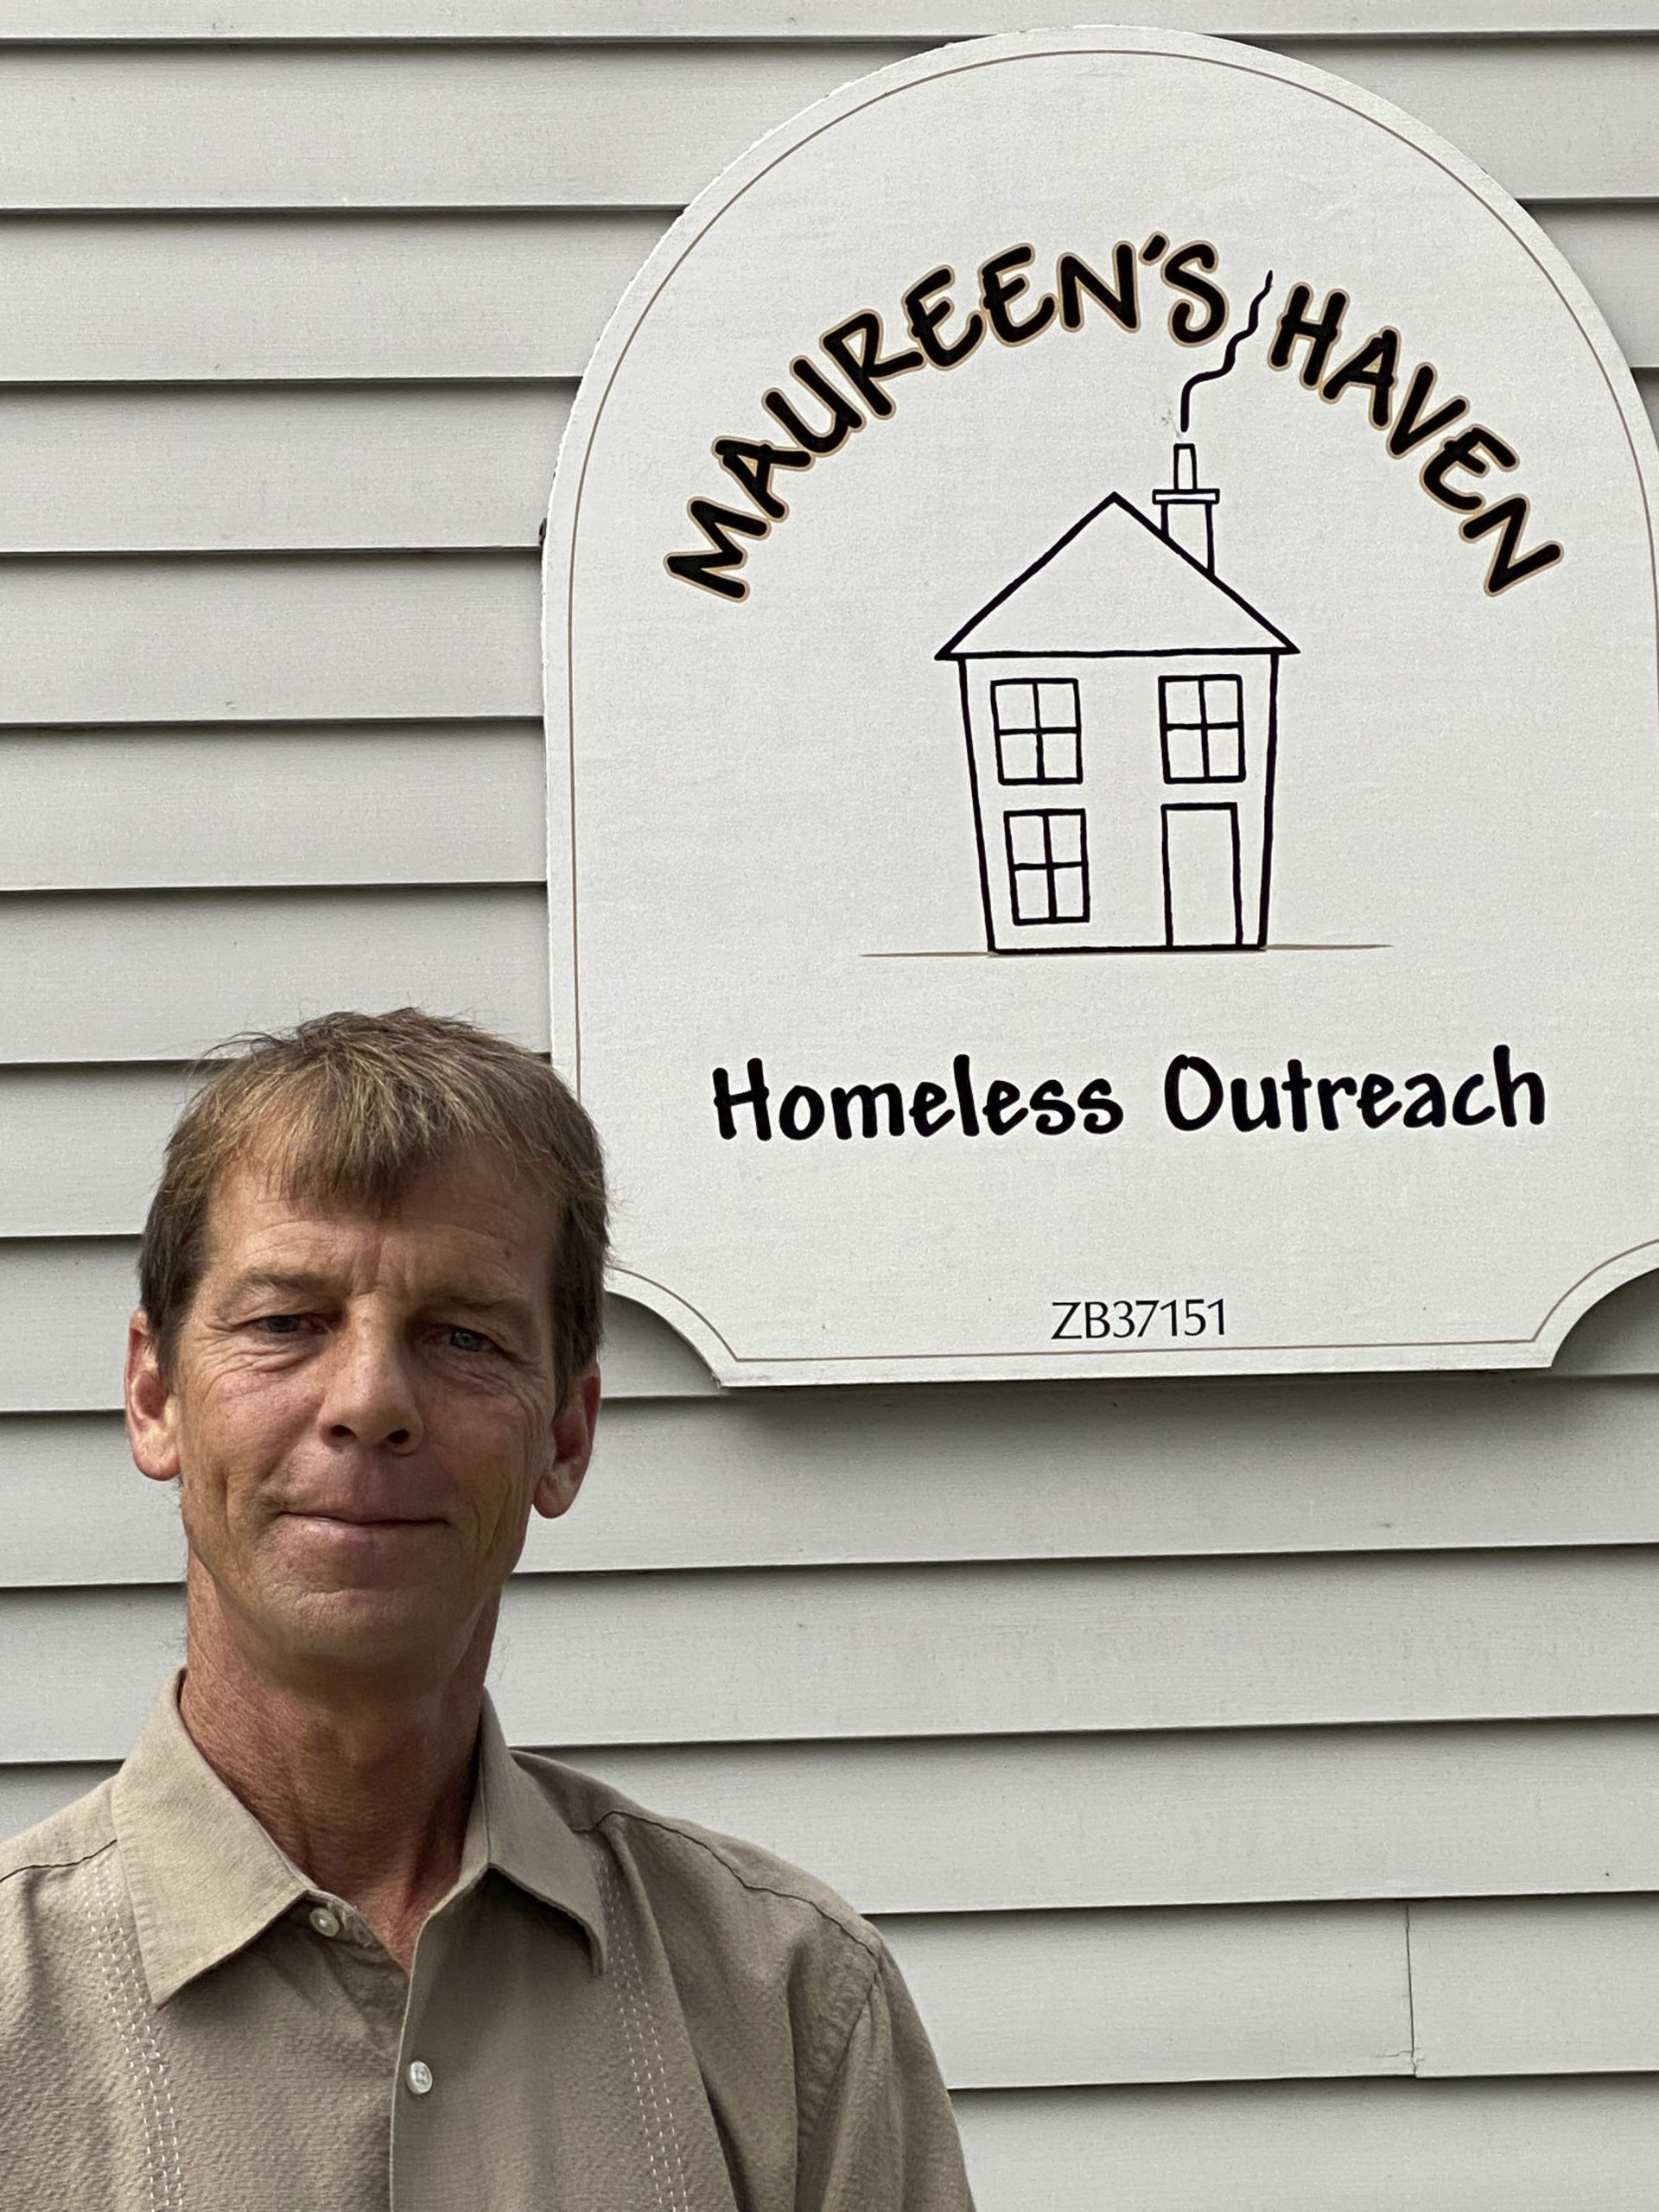 Daniel O’Shea has served as executive director of Maureen’s Haven since the spring of 2018.  COURTESY DANIEL O'SHEA